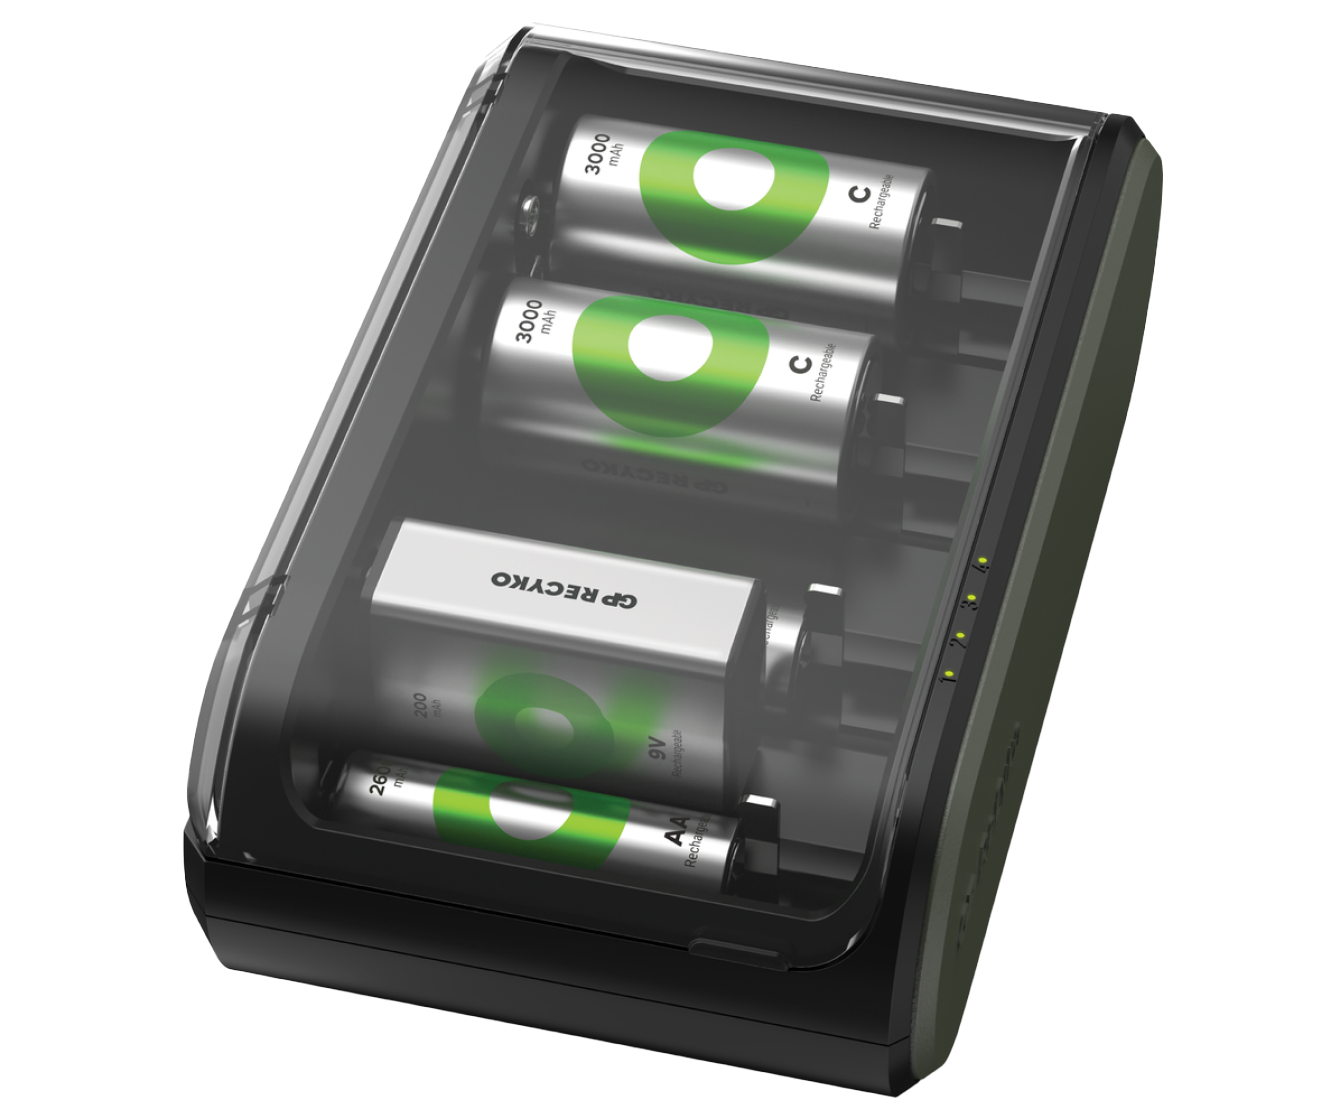 GP Recyko B631 USB Universal Battery Charger